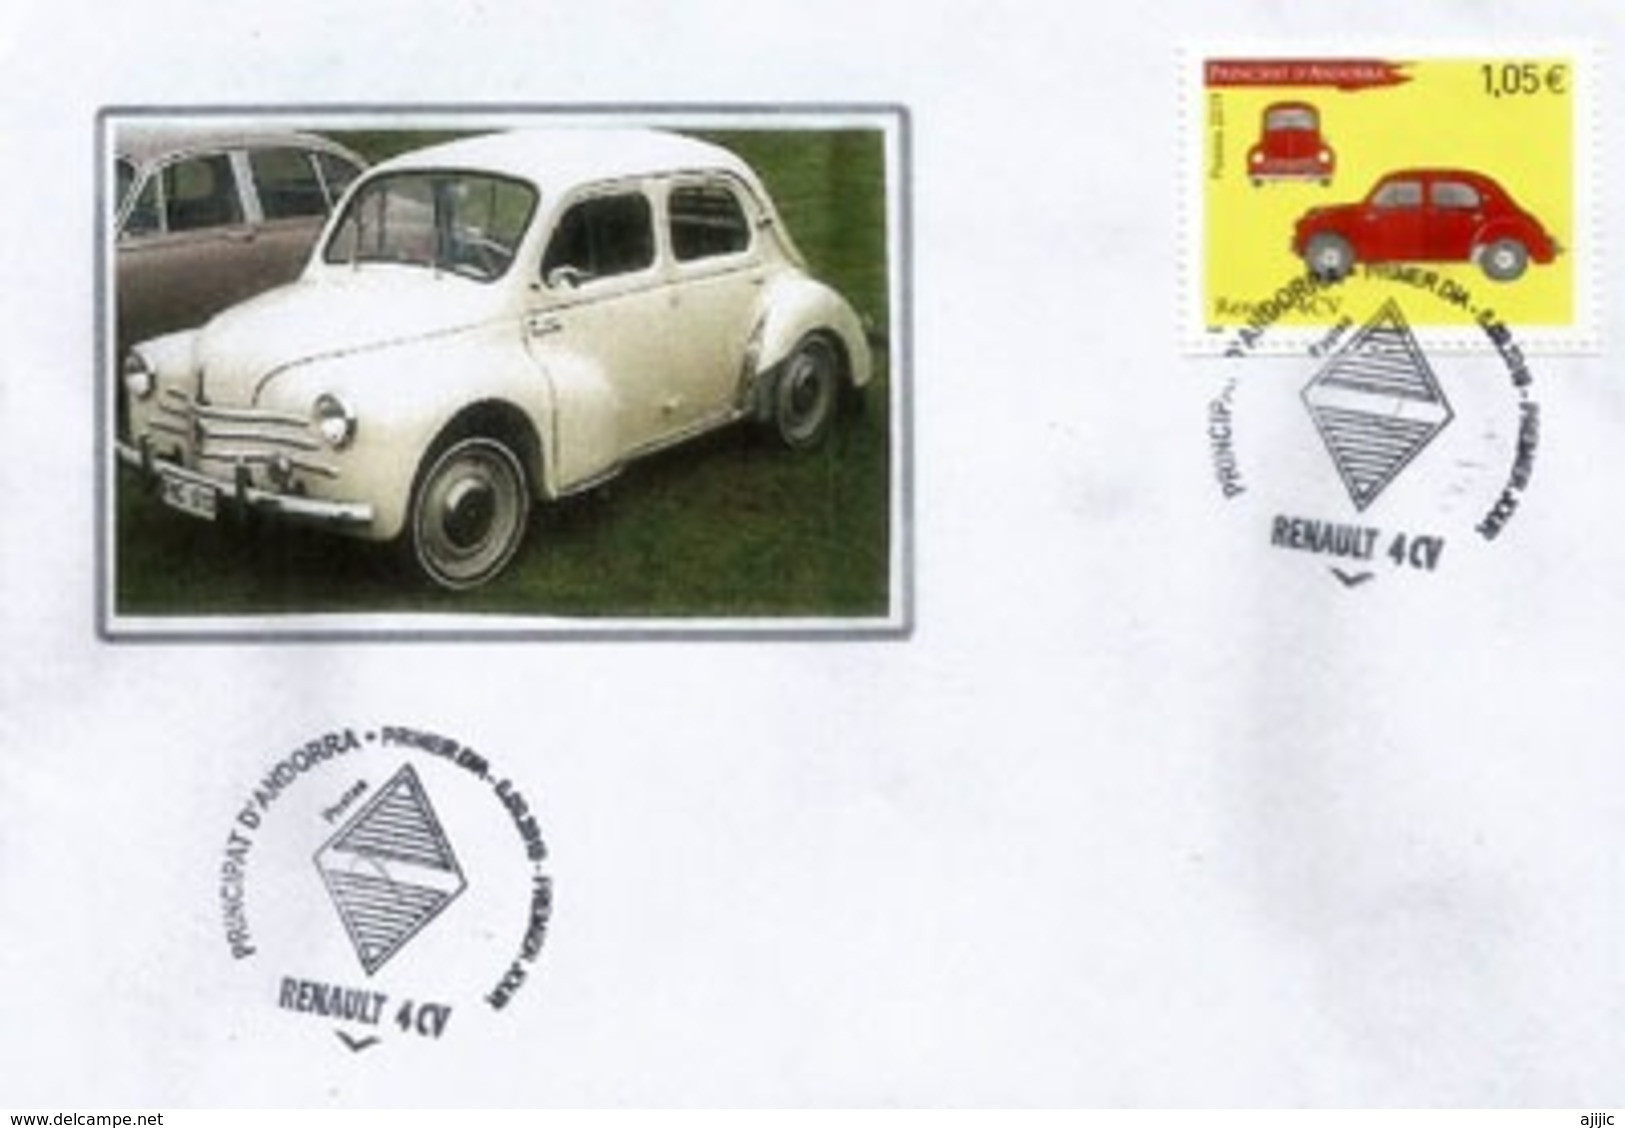 ANDORRA. Renault 4CV, Année 1947. émission Année 2019.  Oblitération Illustrée Losange Renault.  FDC - Briefe U. Dokumente